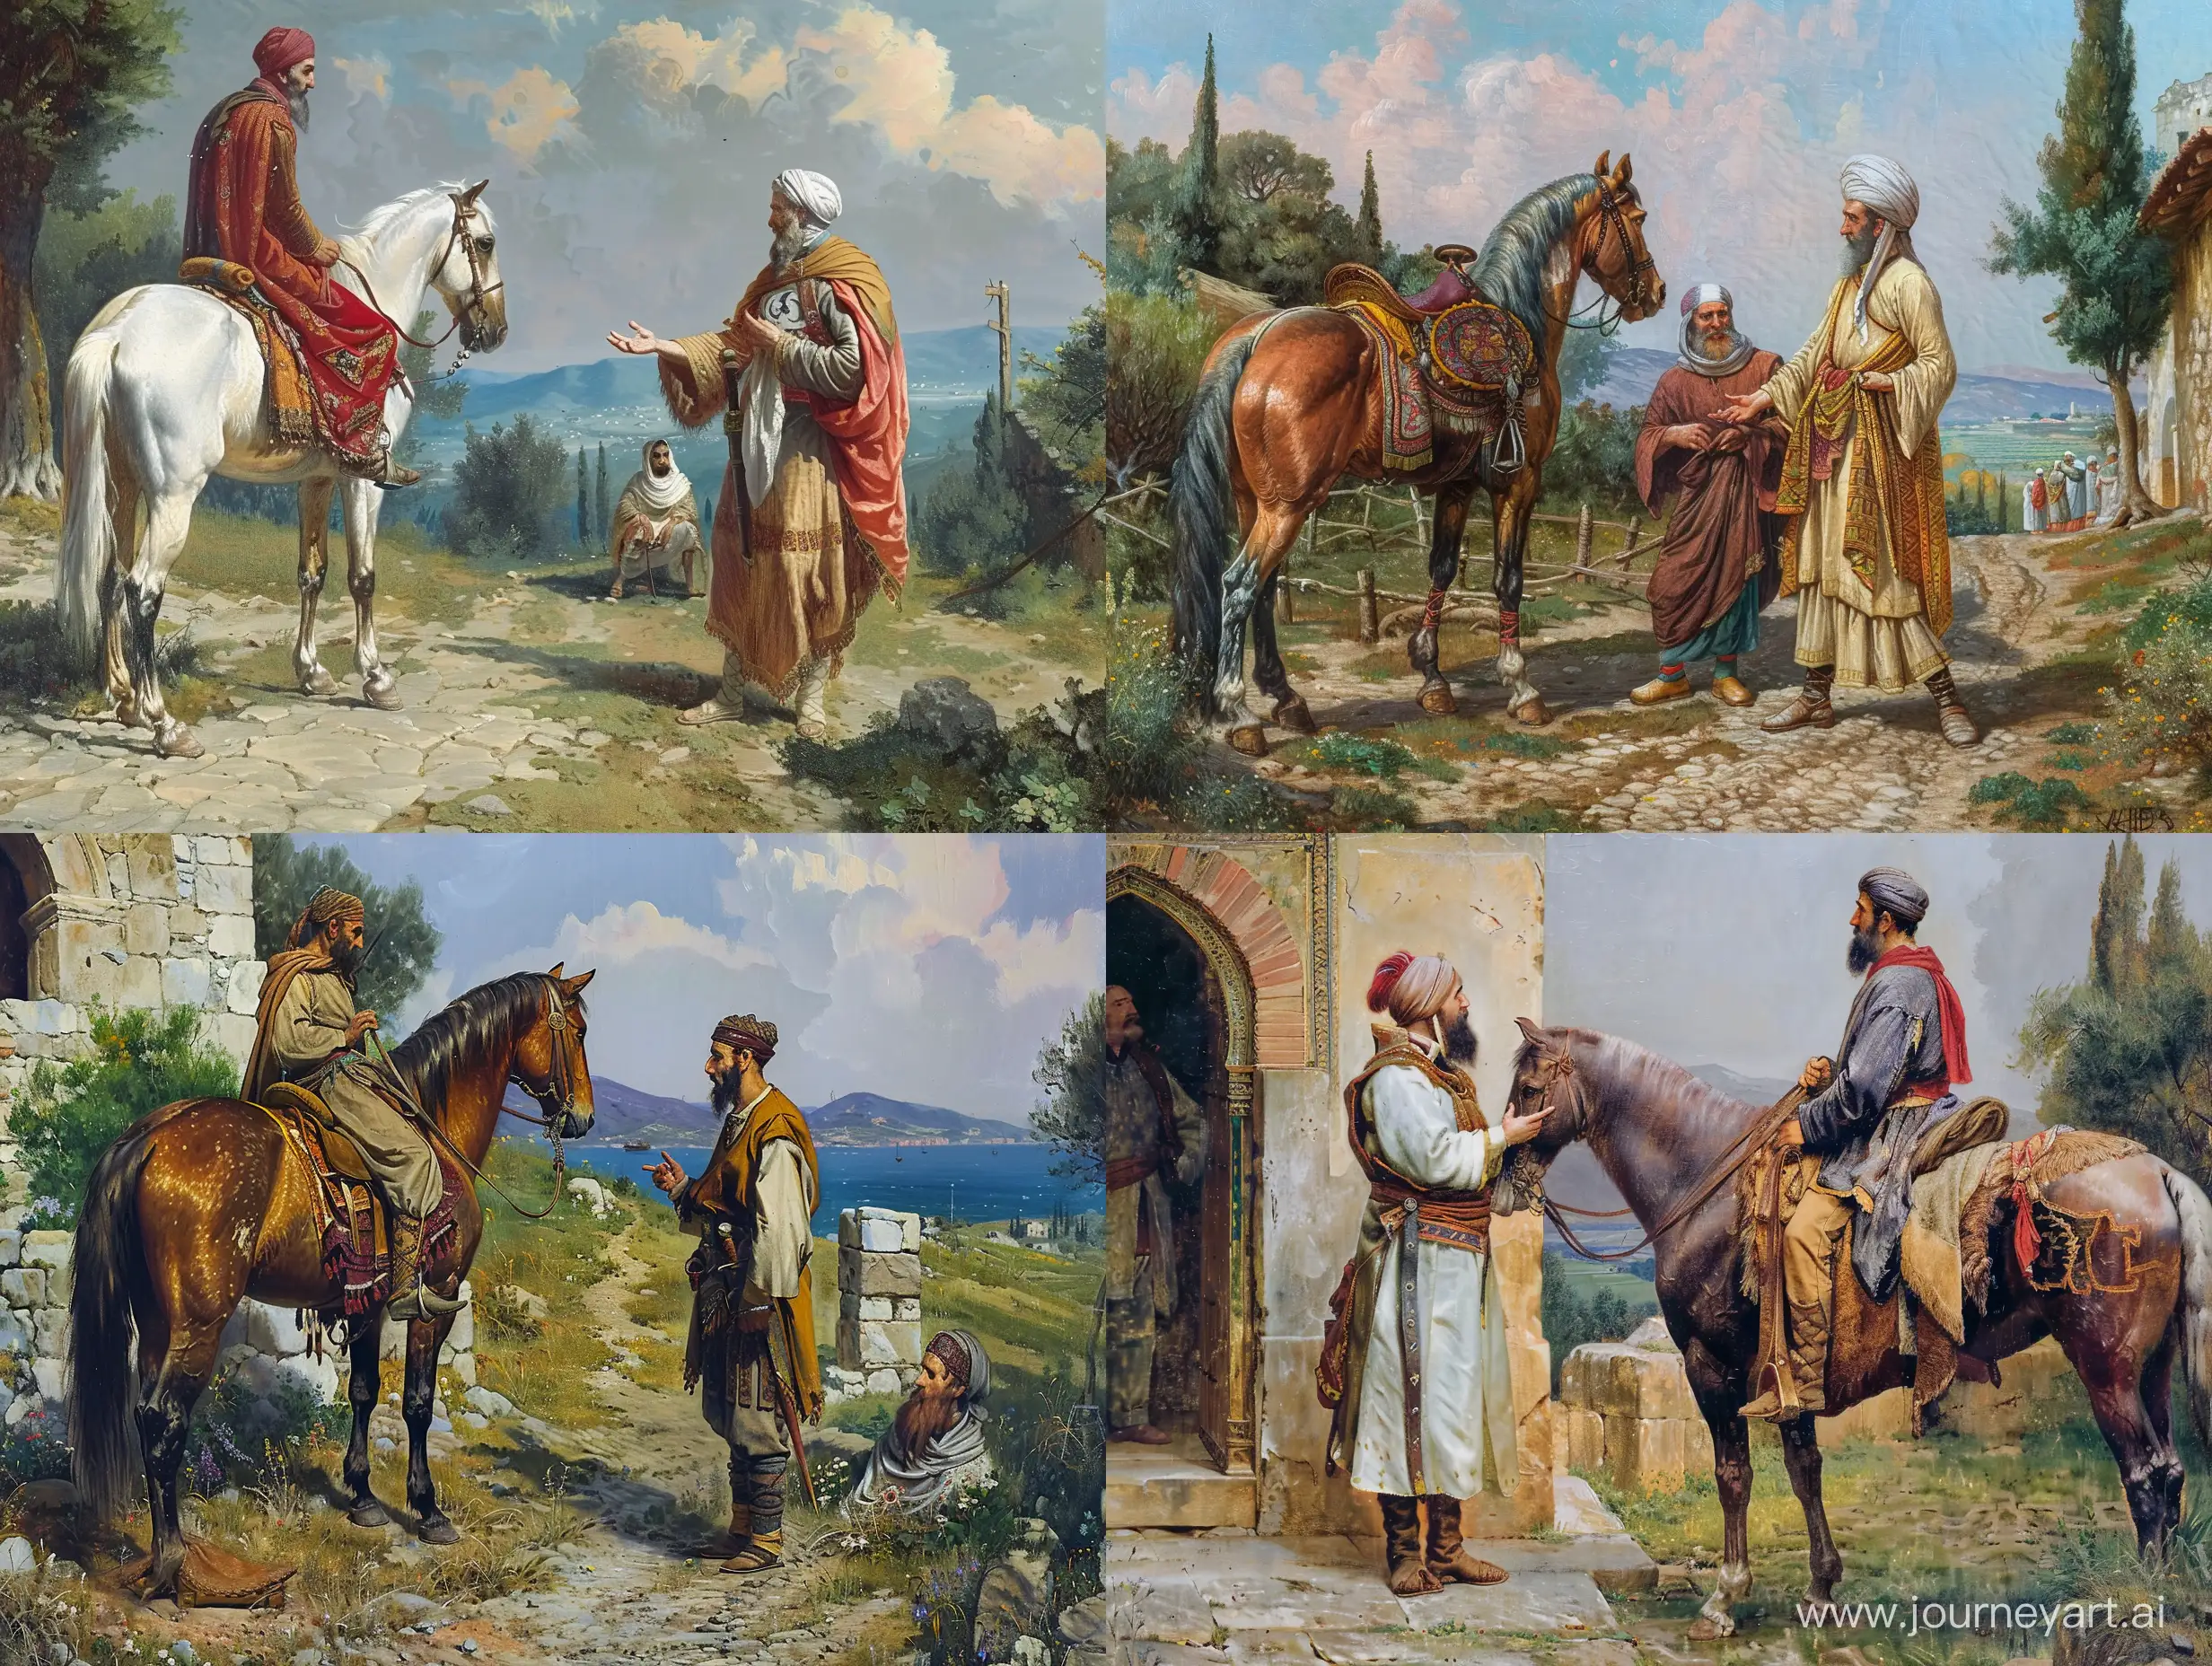 Encounter-of-Medieval-Turkic-Man-and-Greek-Peasant-in-Anatolia-Renaissance-Style-Painting-by-Leonardo-Da-Vinci